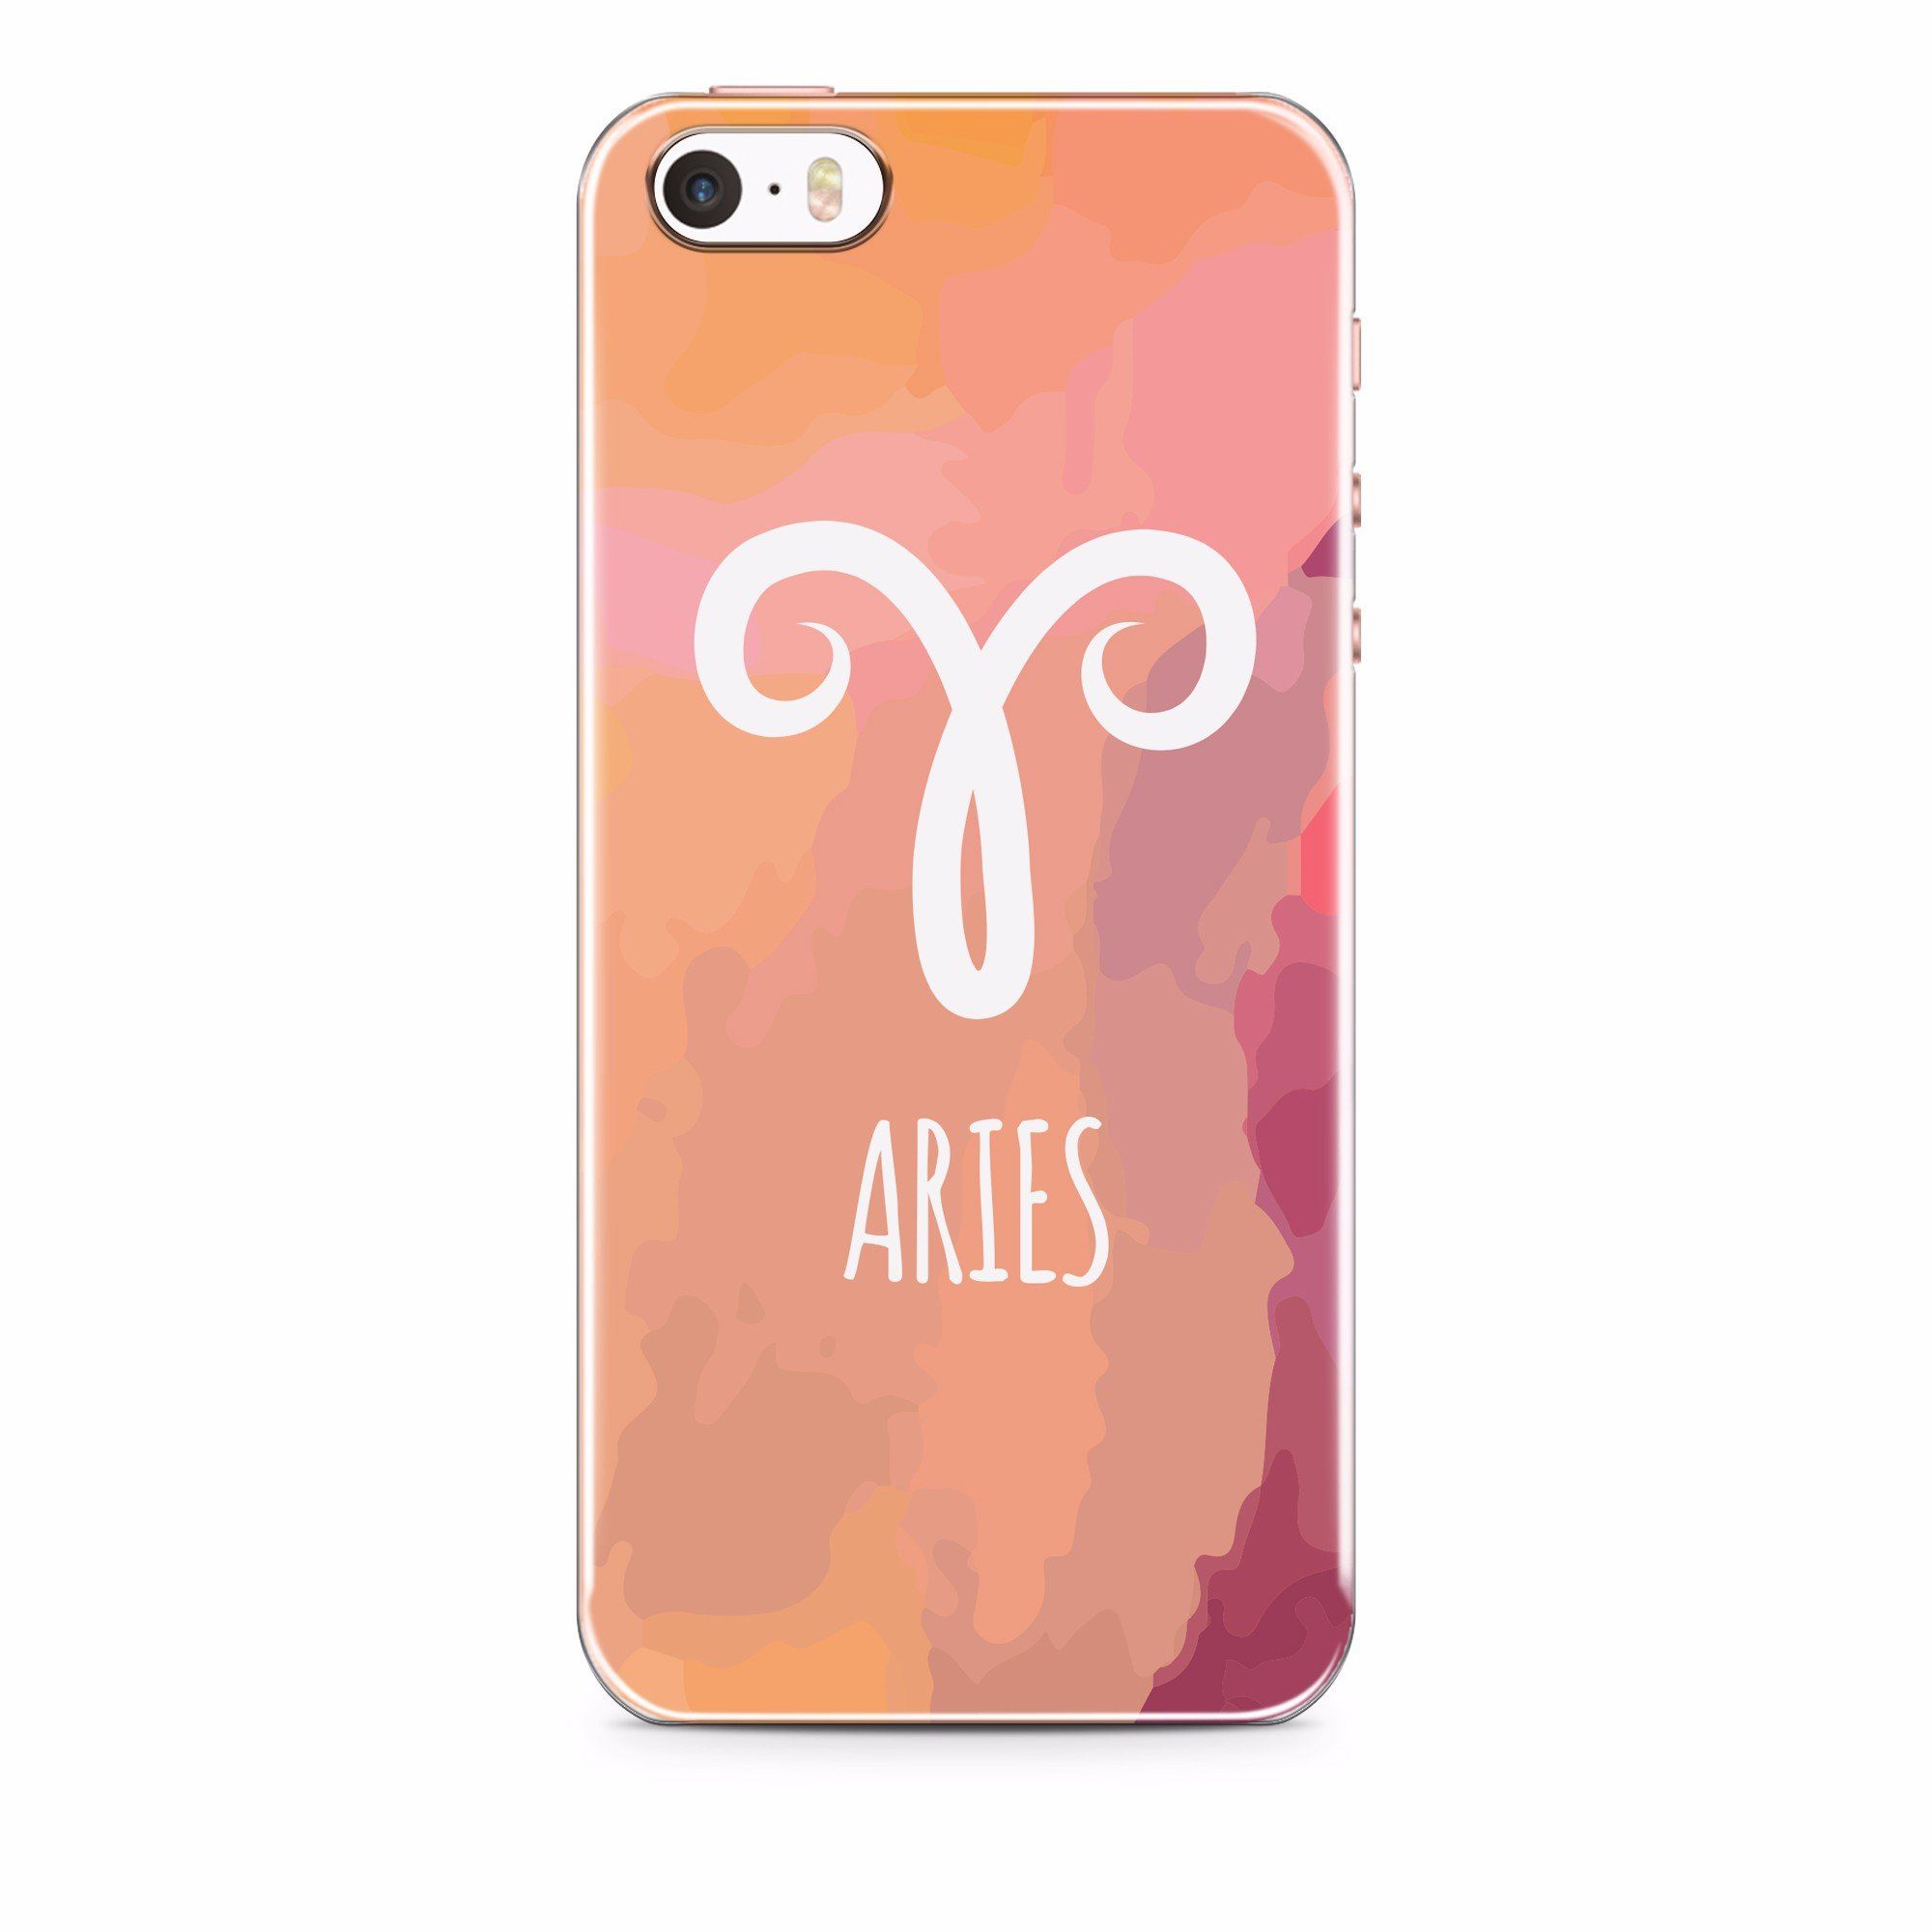  Aries - Iphone 5,5s,SE 